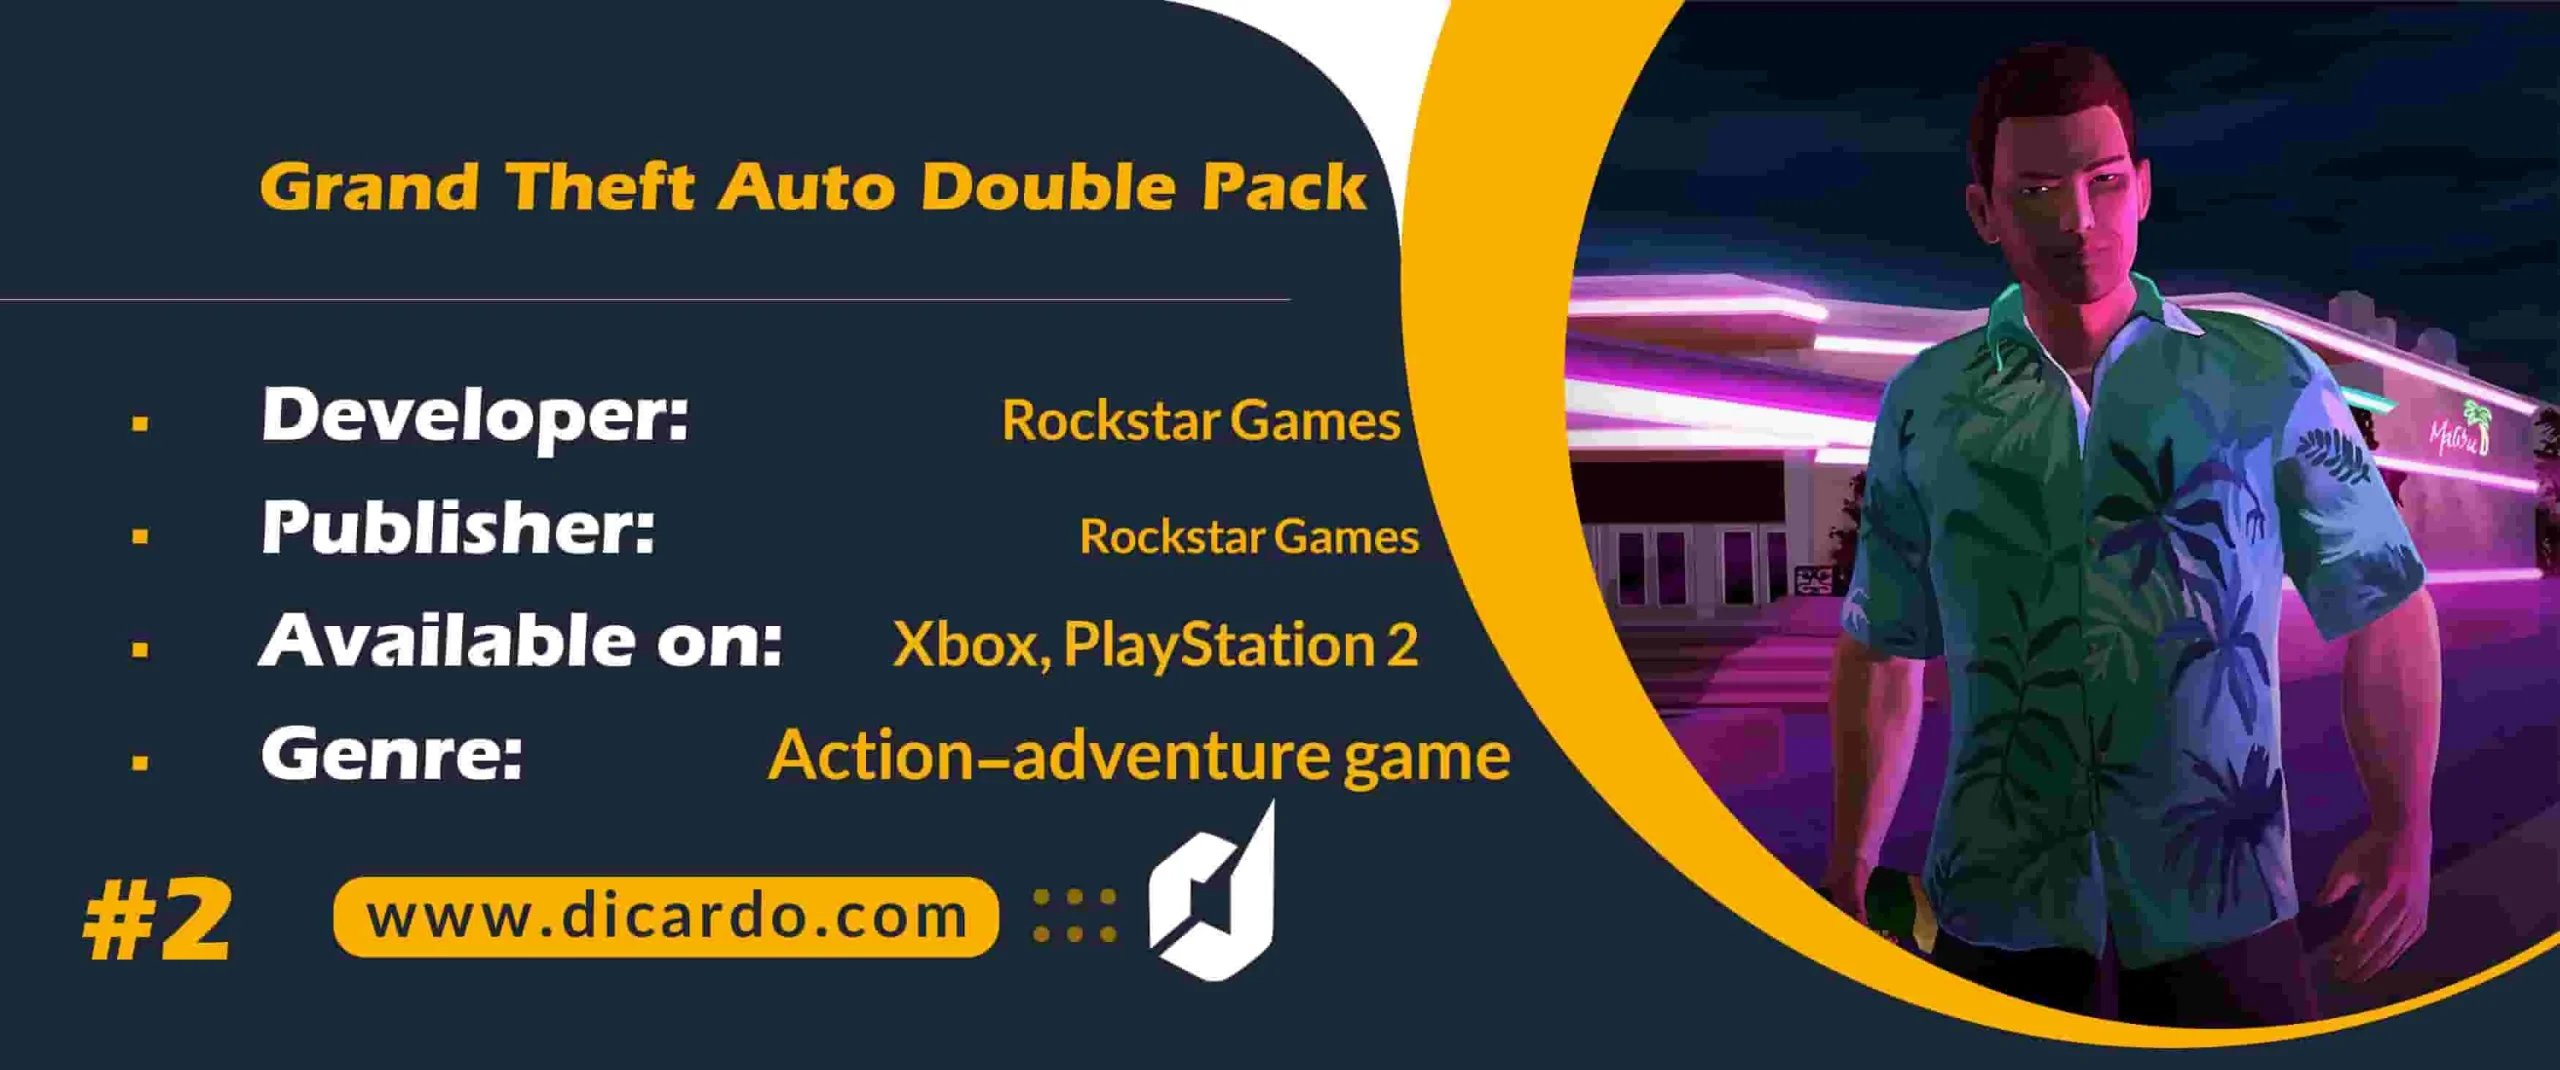 #2 گرند تفت اوتو دابل پک Grand Theft Auto Double Pack